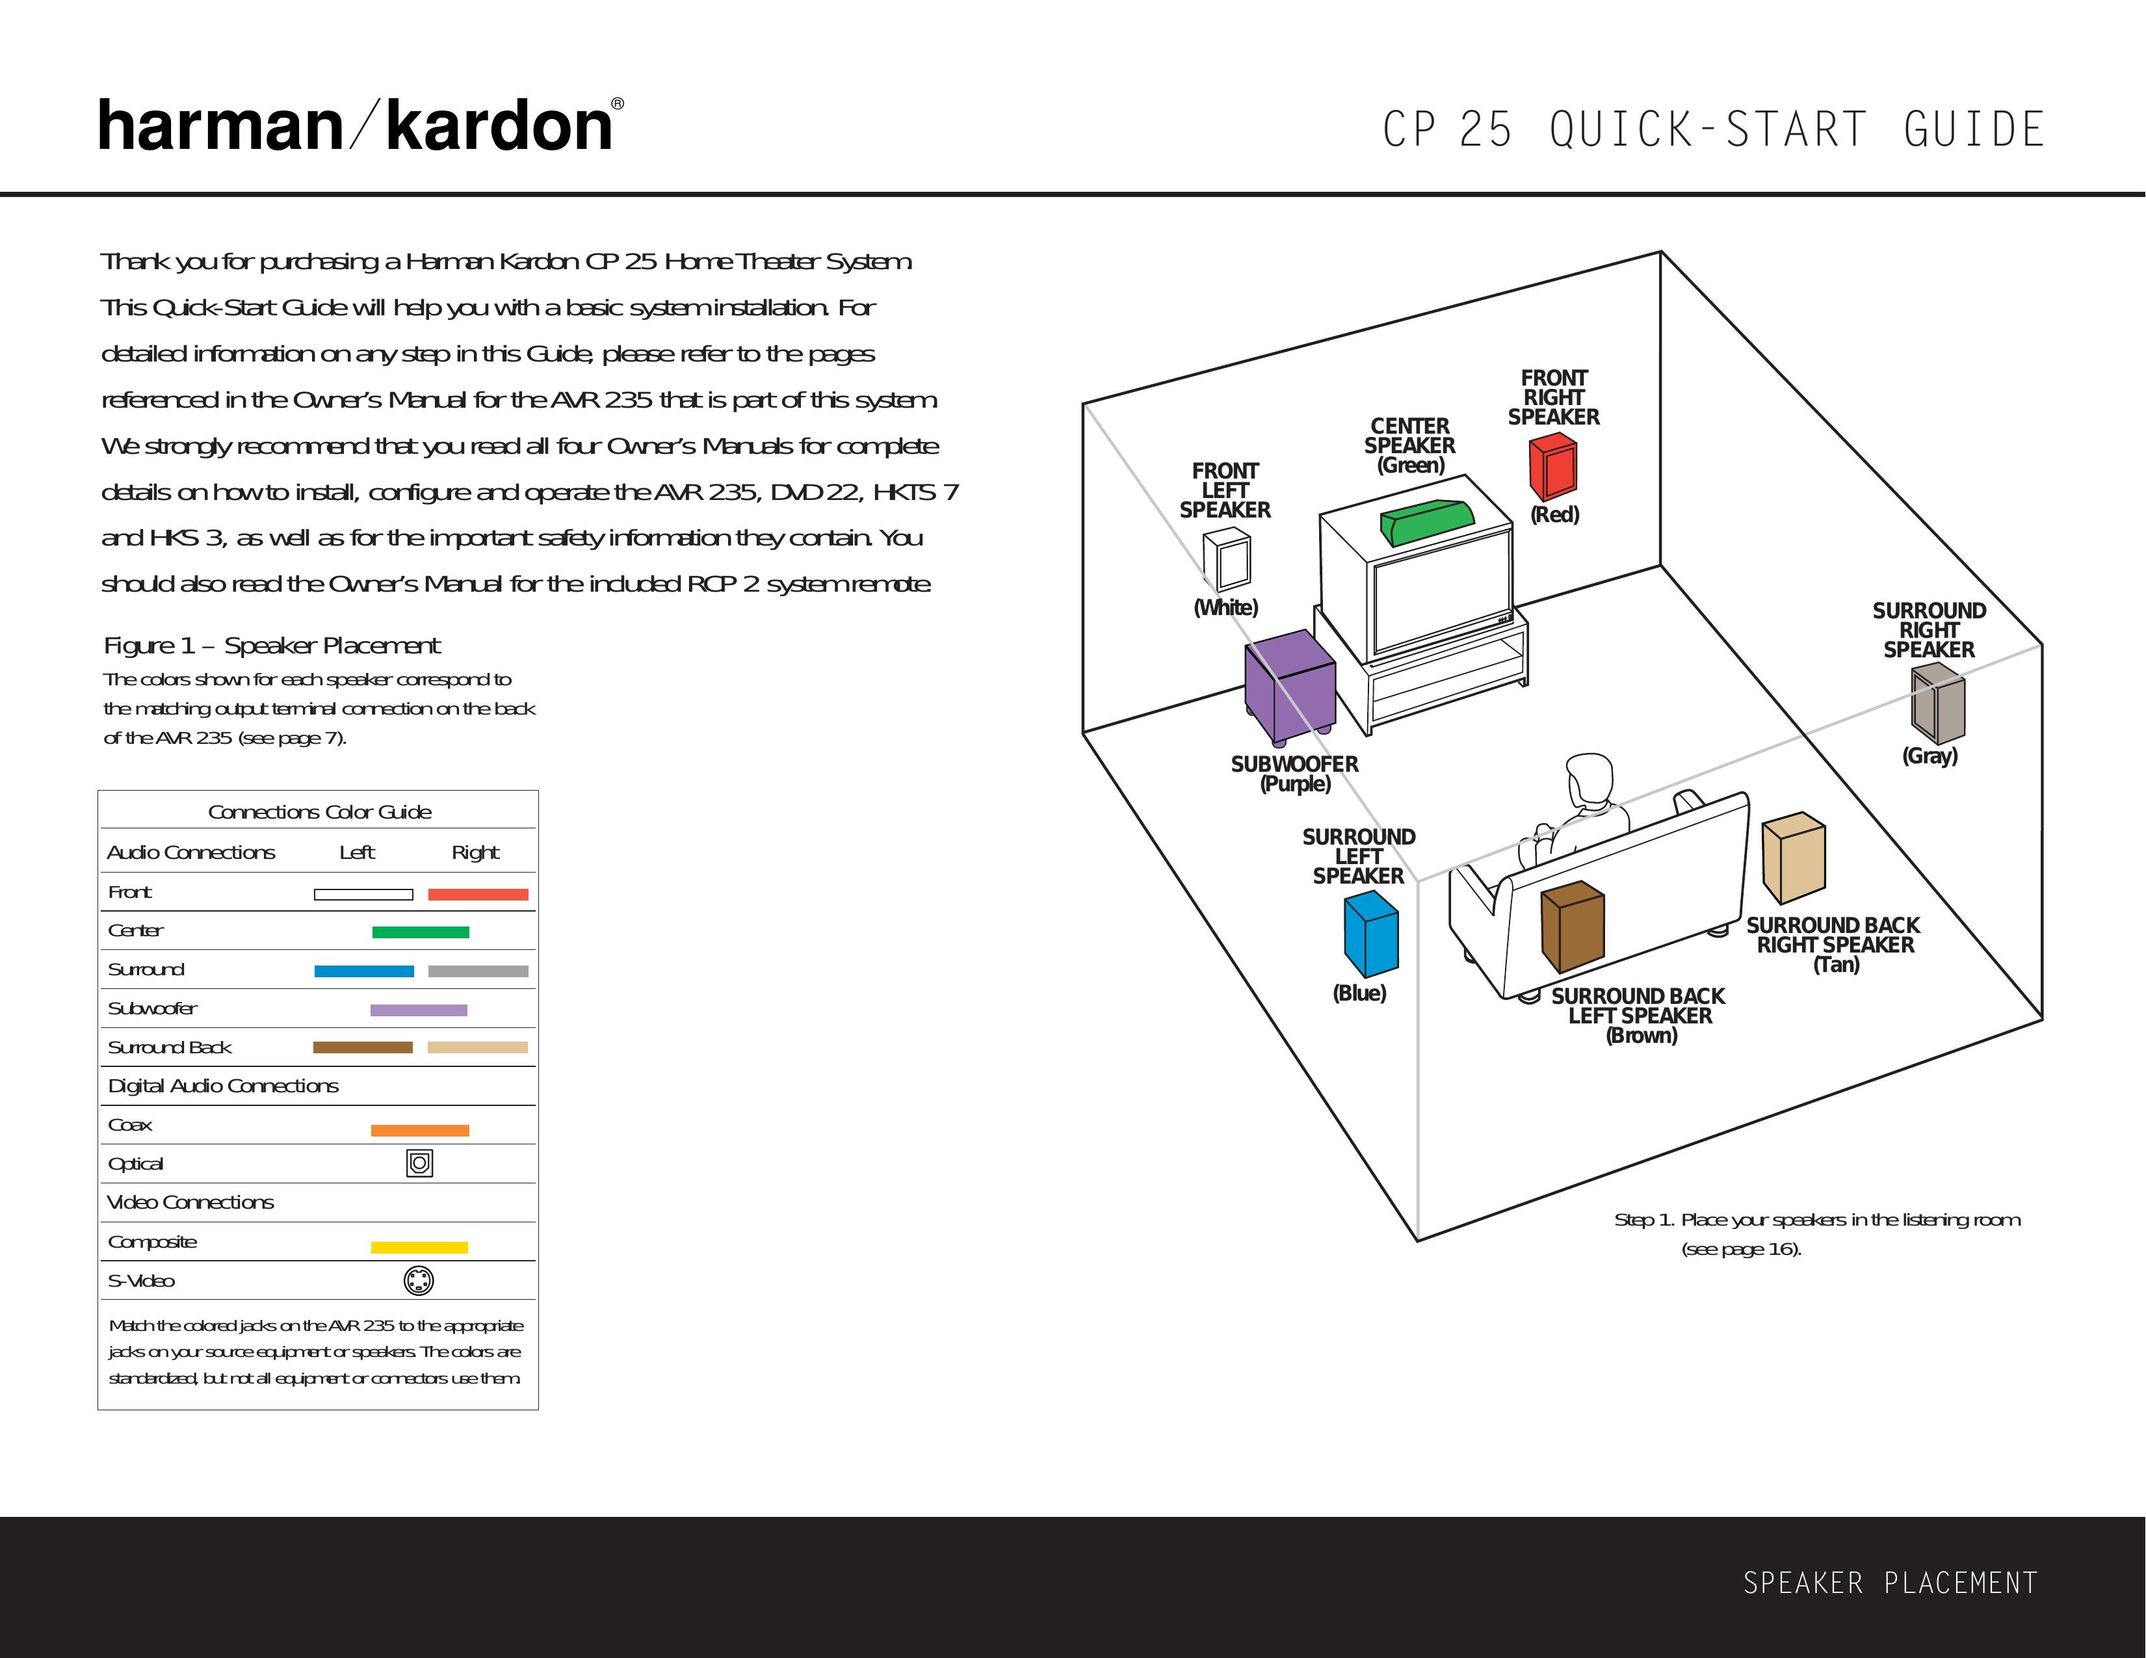 Harman-Kardon CP 25 Home Theater System User Manual